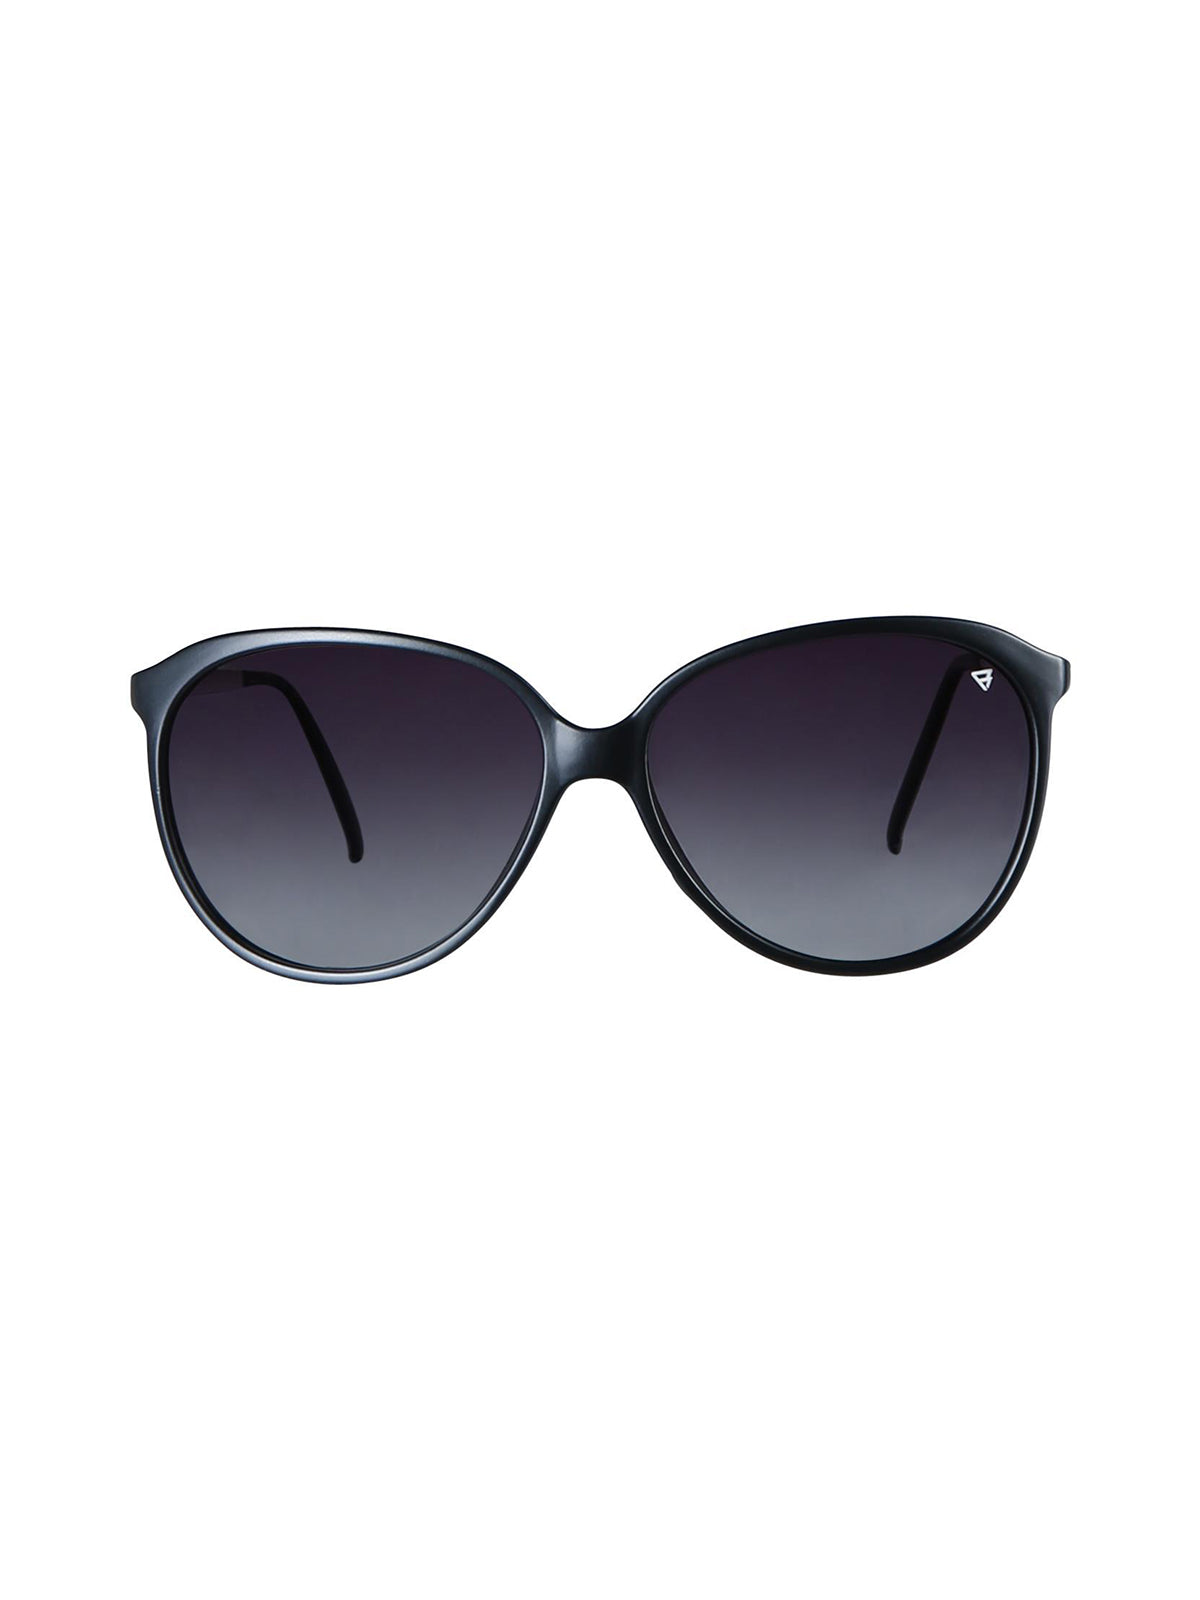 Amoer 2 Women Sunglasses | Black